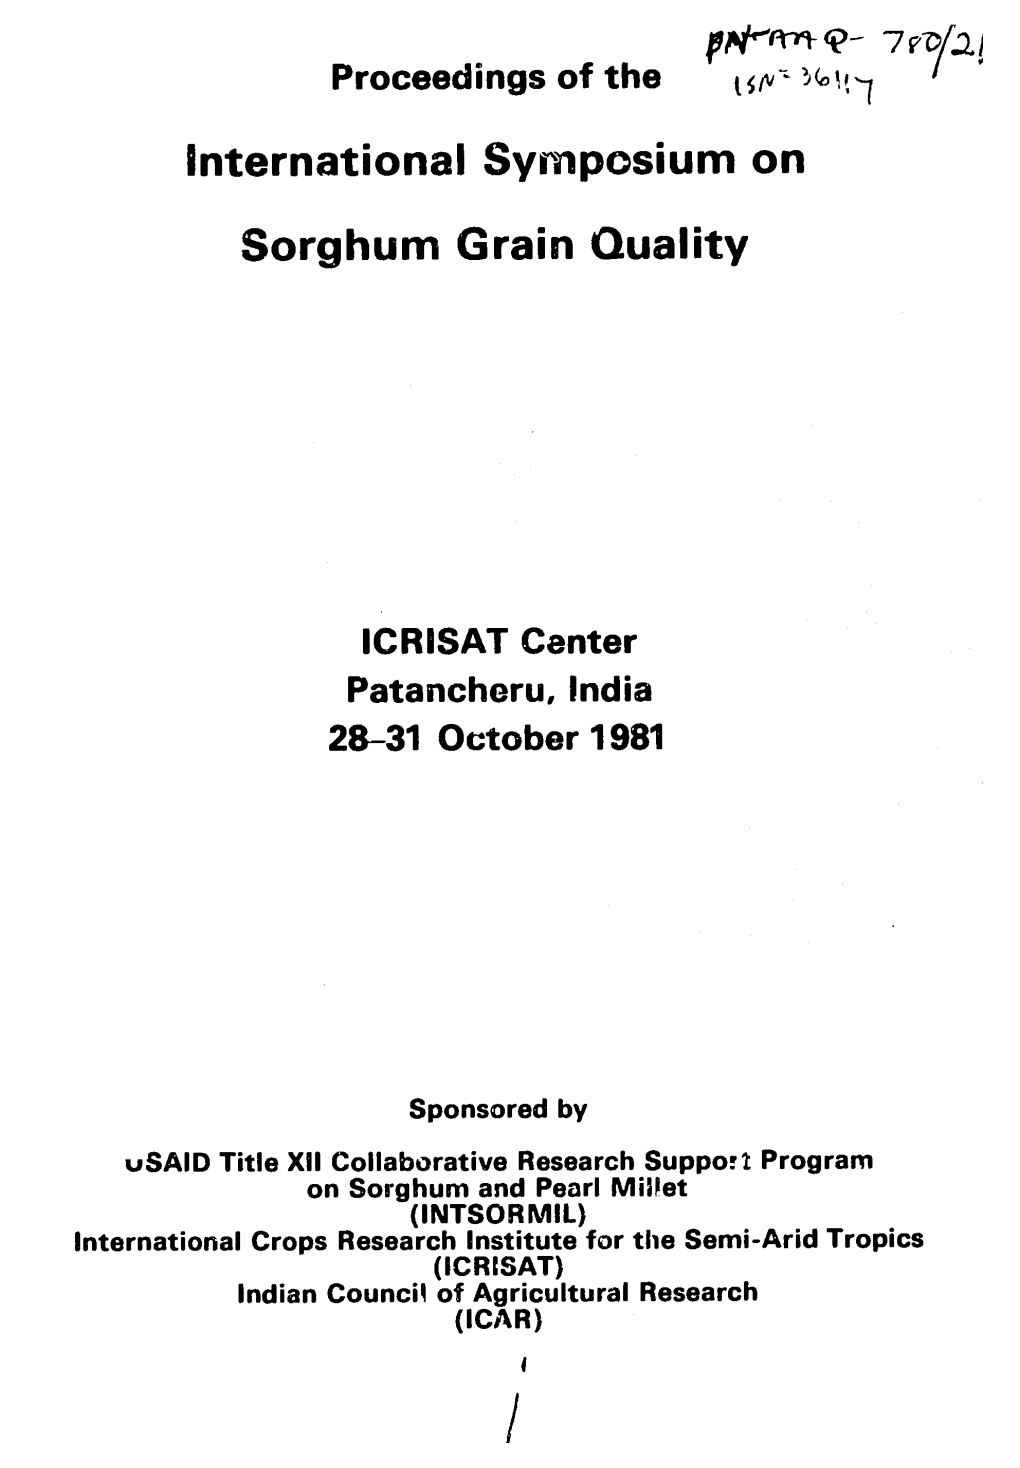 International Symposium on Sorghum Grain Quality